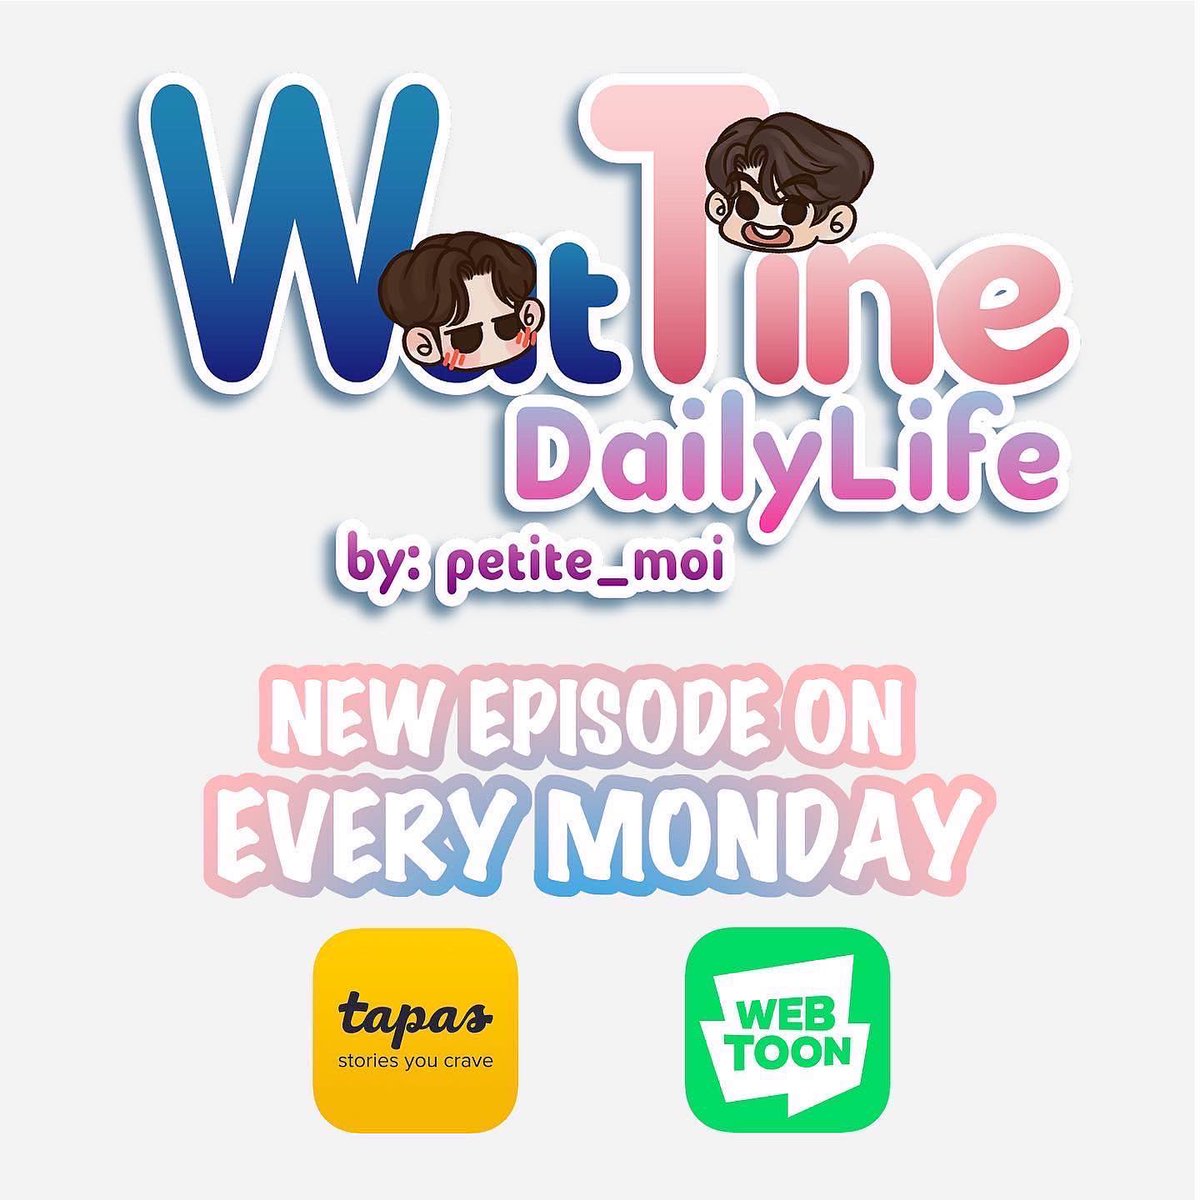 WatTine continues their dating ❤️ 
Read it now!🎉🎉

Tapas:
tapas.io/series/WatTine…

Webtoon: 
webtoons.com/en/challenge/w…

#wattinedailylife 
#คั่นกูthemovie #2gethertheseries #still2gether #ยังคั่นกู #คั่นกู #sarawattine #ไบร์ทวิน #brightwin #ClipStudioPaint #petitem0i